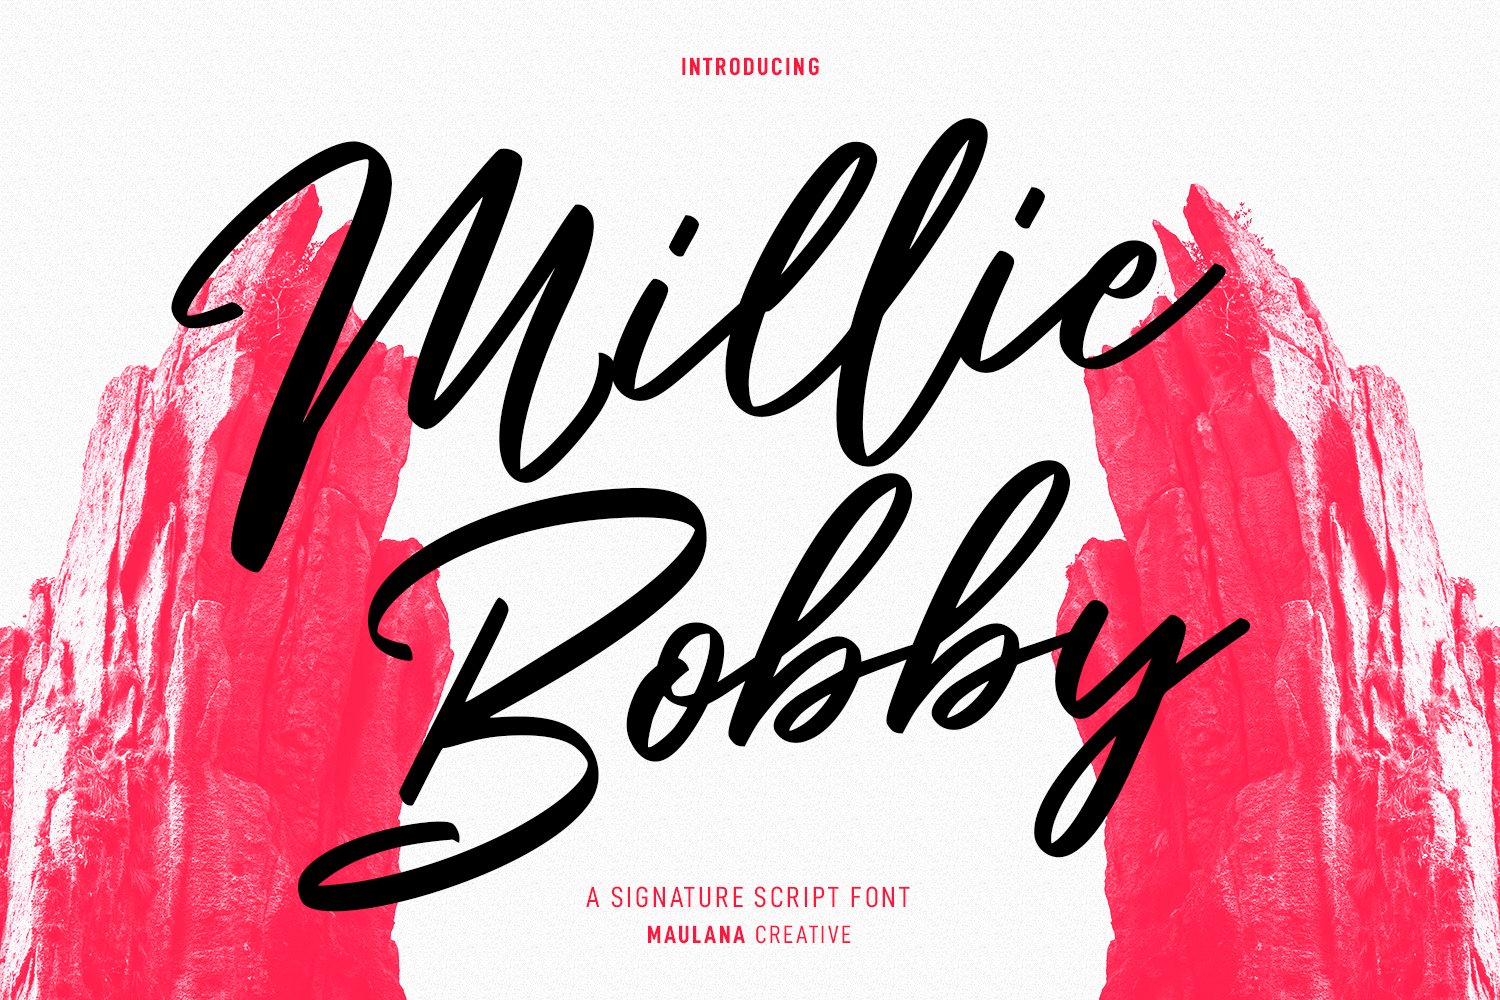 Millie Bobby Signature Script Font cover image.